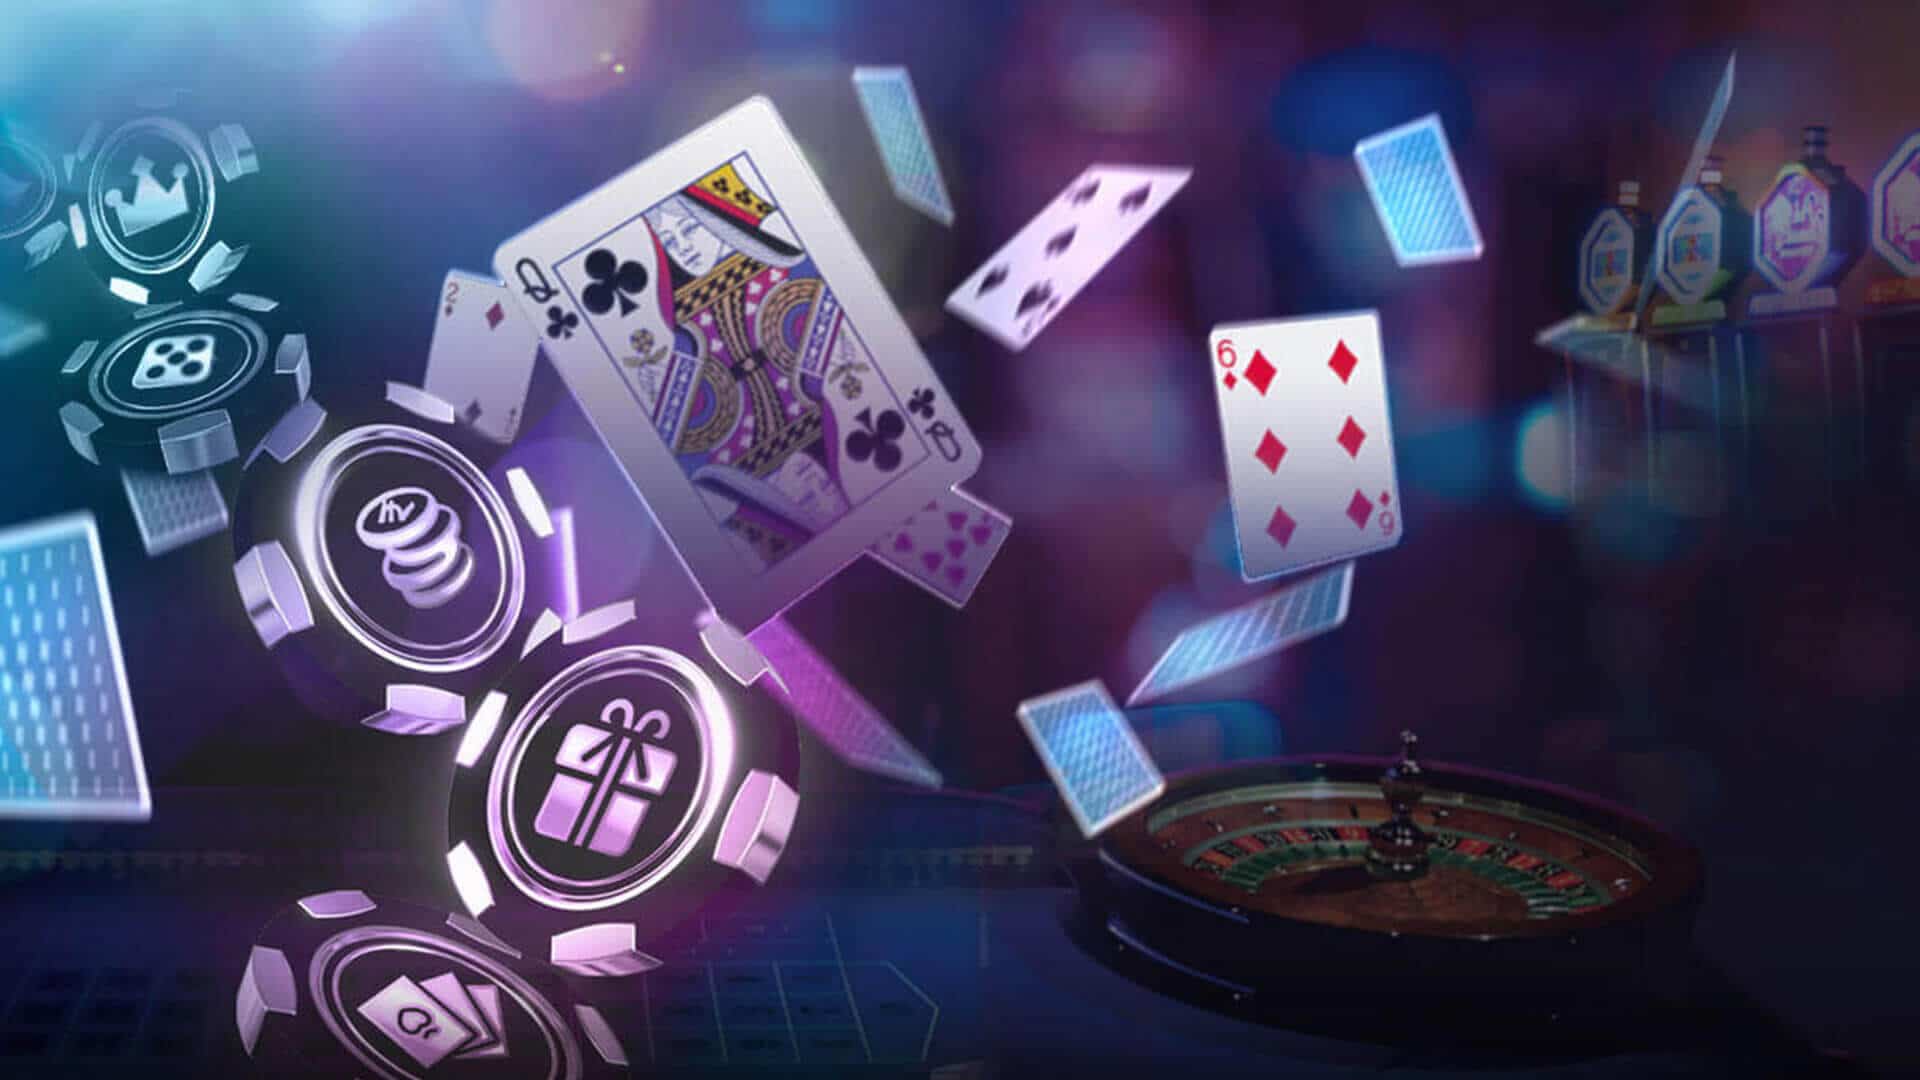 Ultra casino